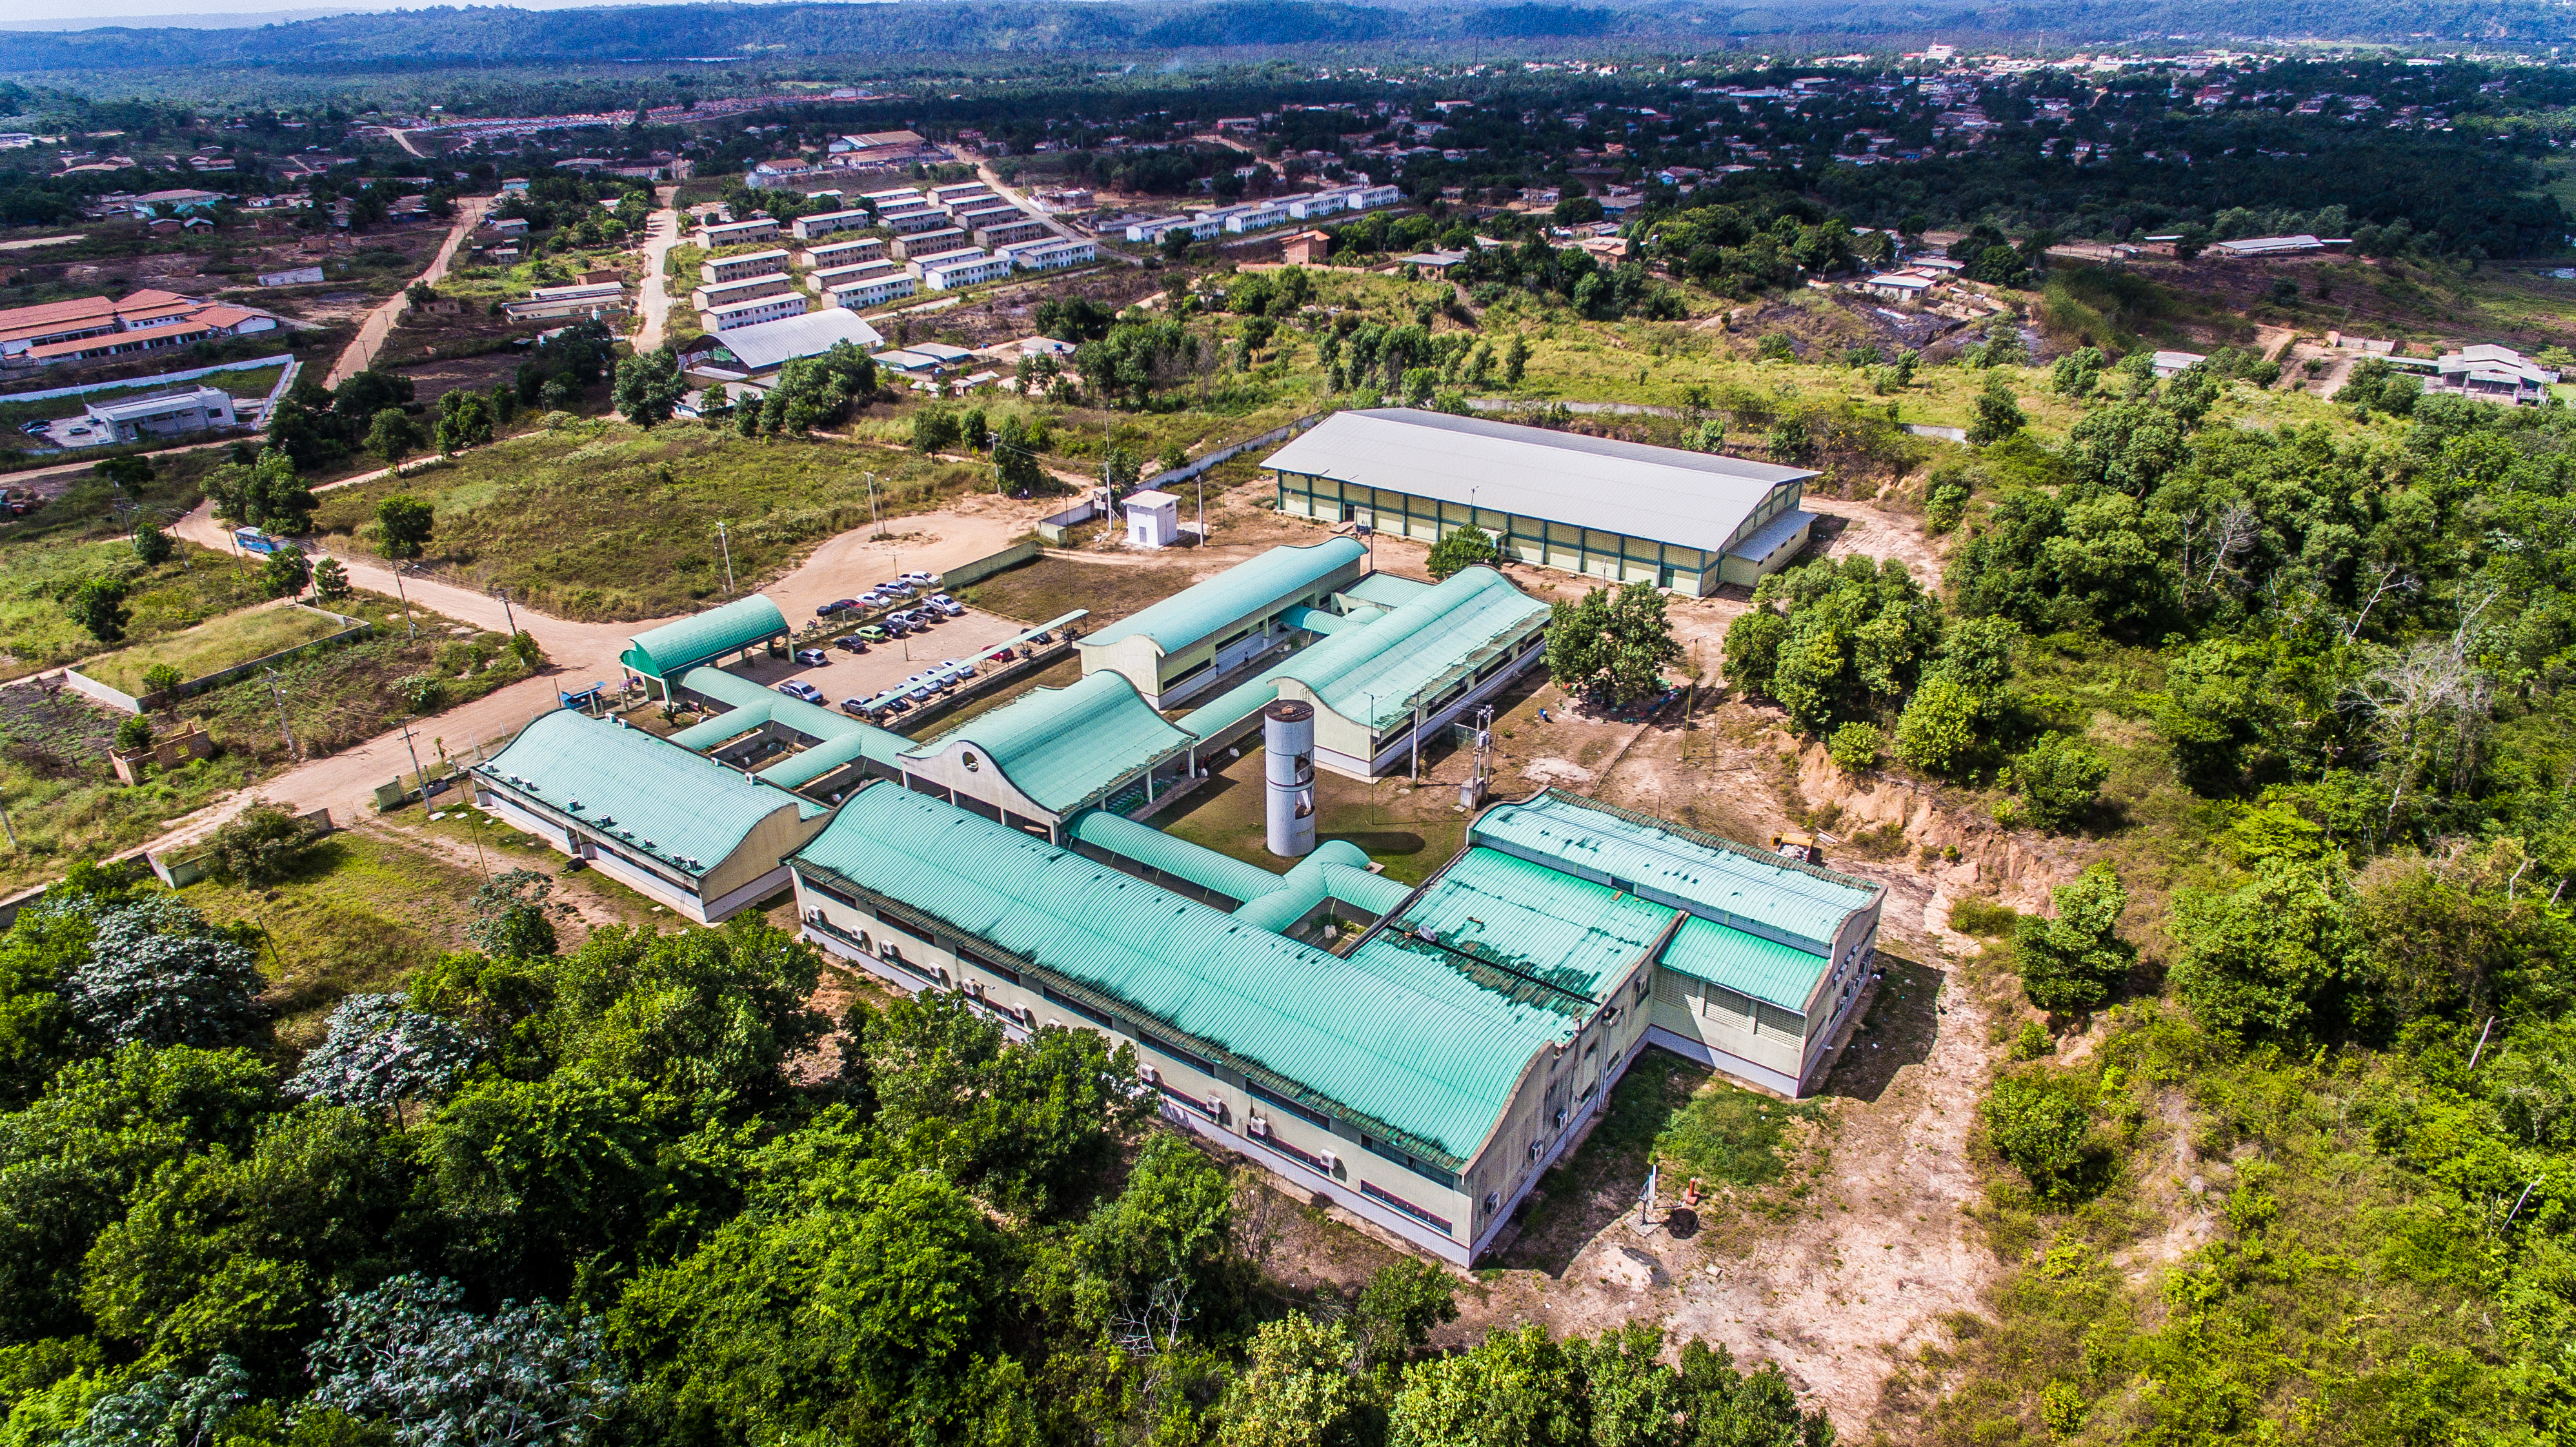 Universidade Federal do AmapÃ¡-MacapÃ¡ - Profmat